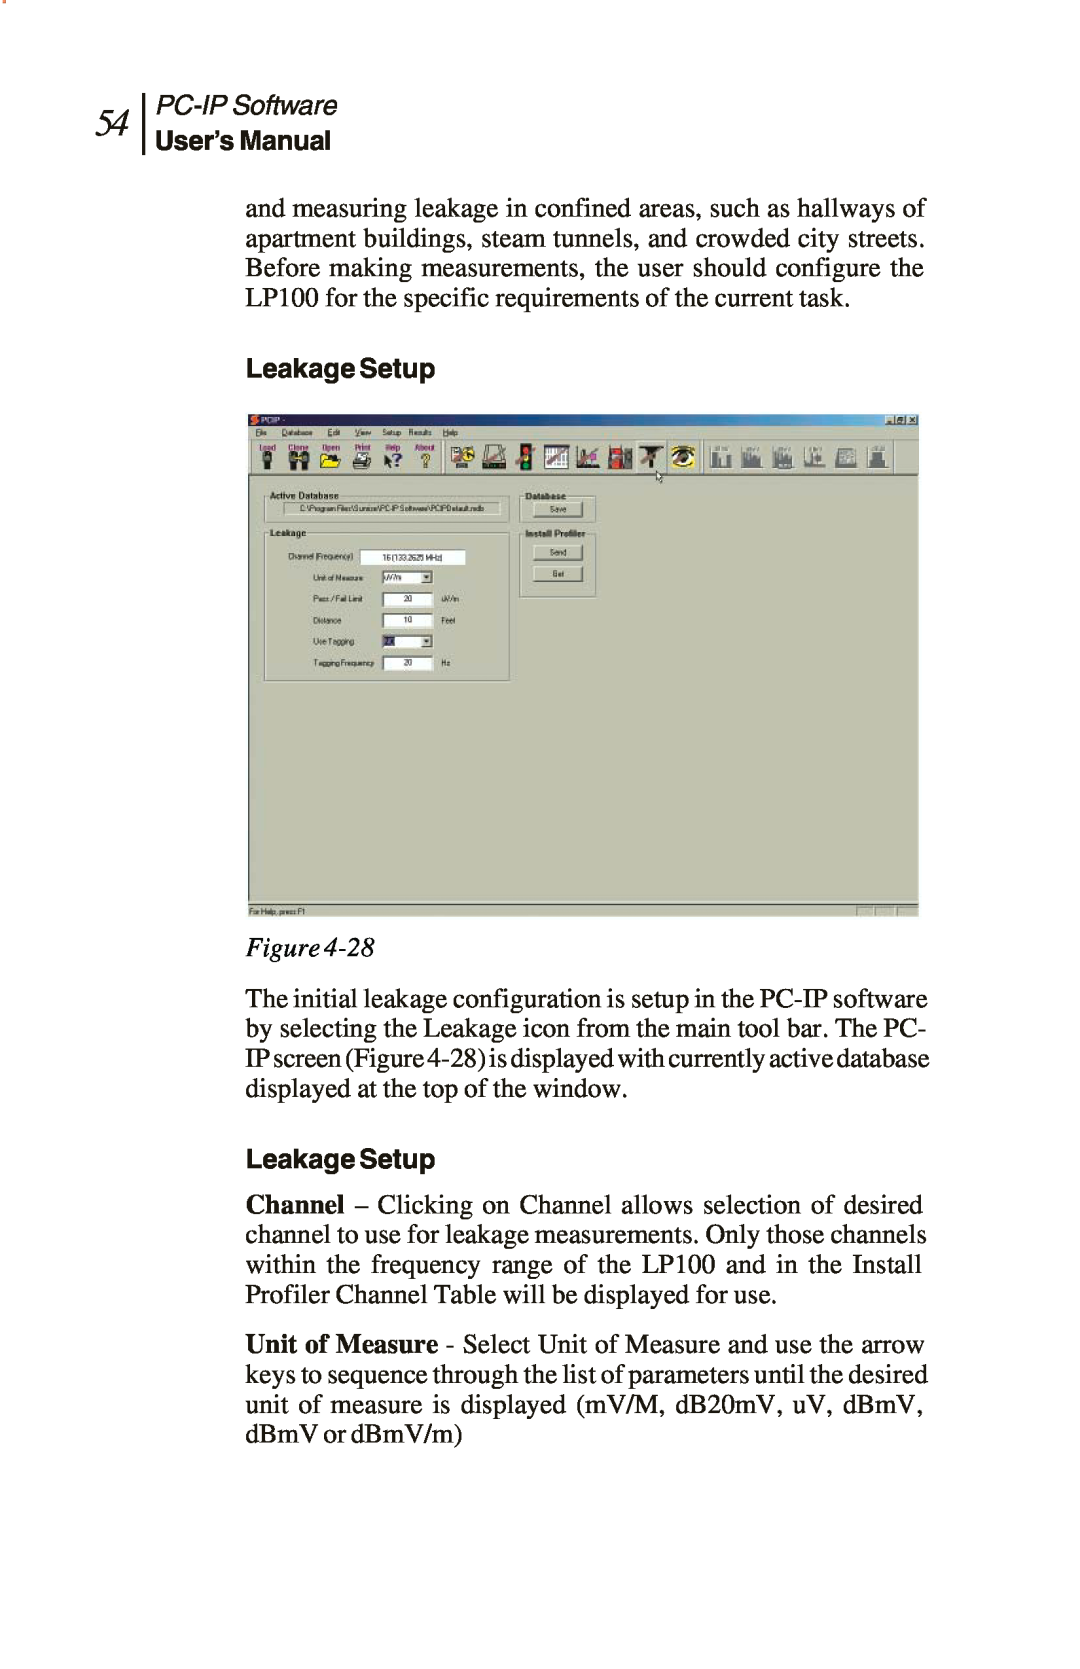 Sunrise Global CM100 IP, CM250 IP, and CM500 IP manual Leakage Setup, PC-IPSoftware, User’s Manual, Figure 